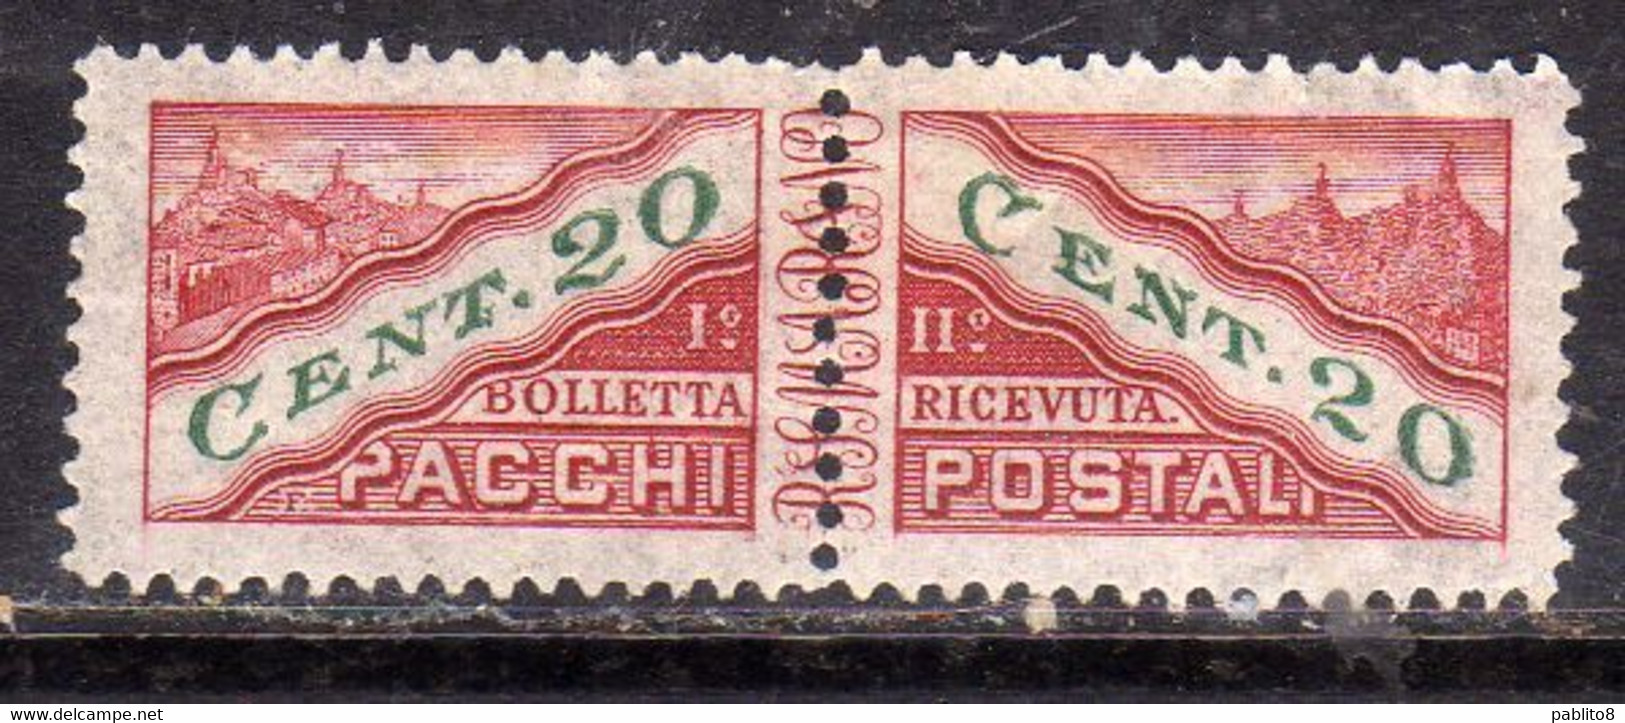 REPUBBLICA DI SAN MARINO 1945 PACCHI POSTALI PARCEL POST CENT. 20c MNH - Parcel Post Stamps